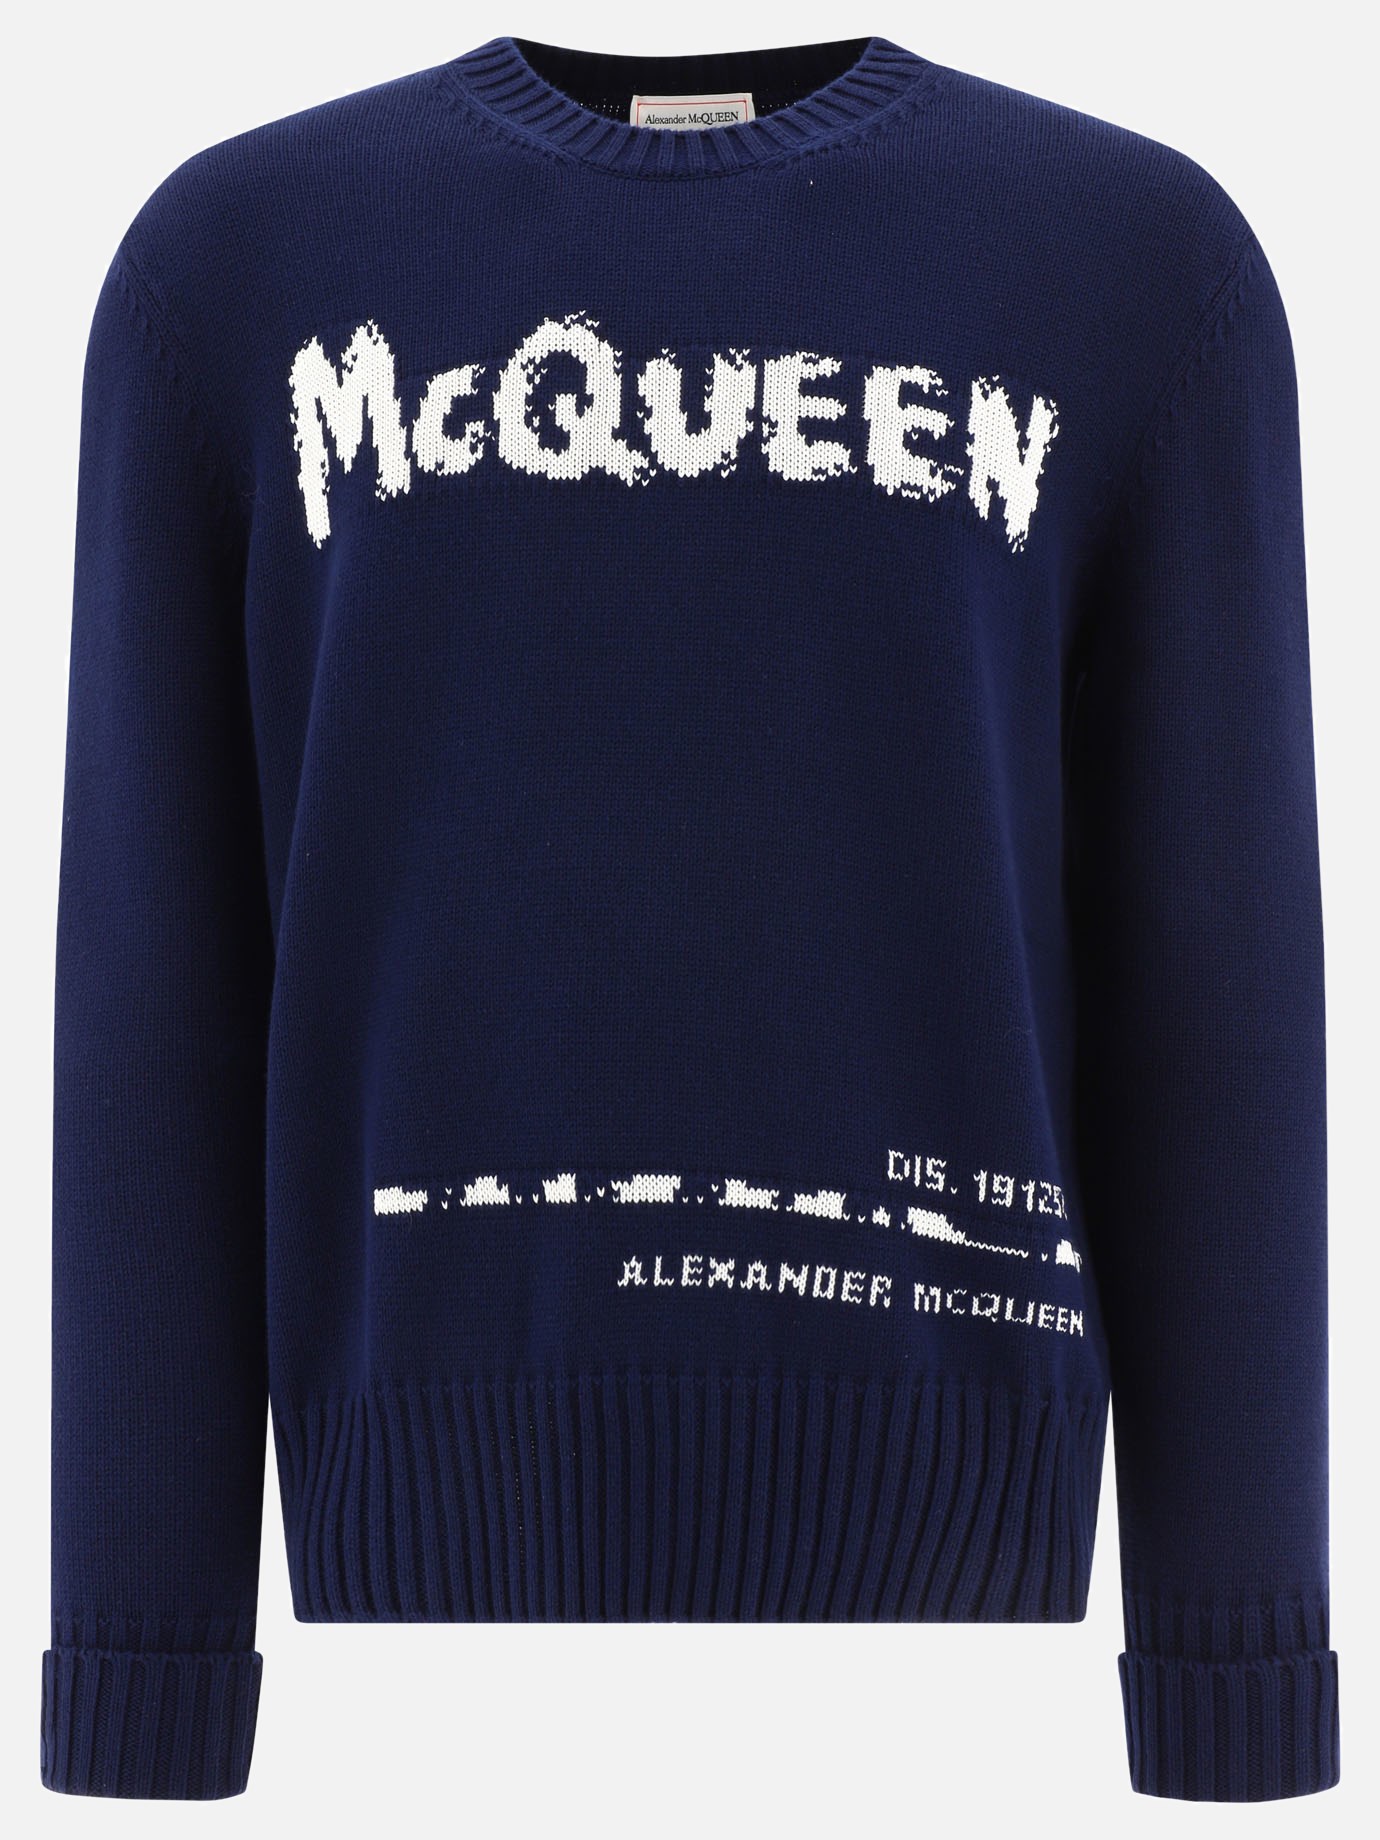  Graffiti  sweaterby Alexander McQueen - 1